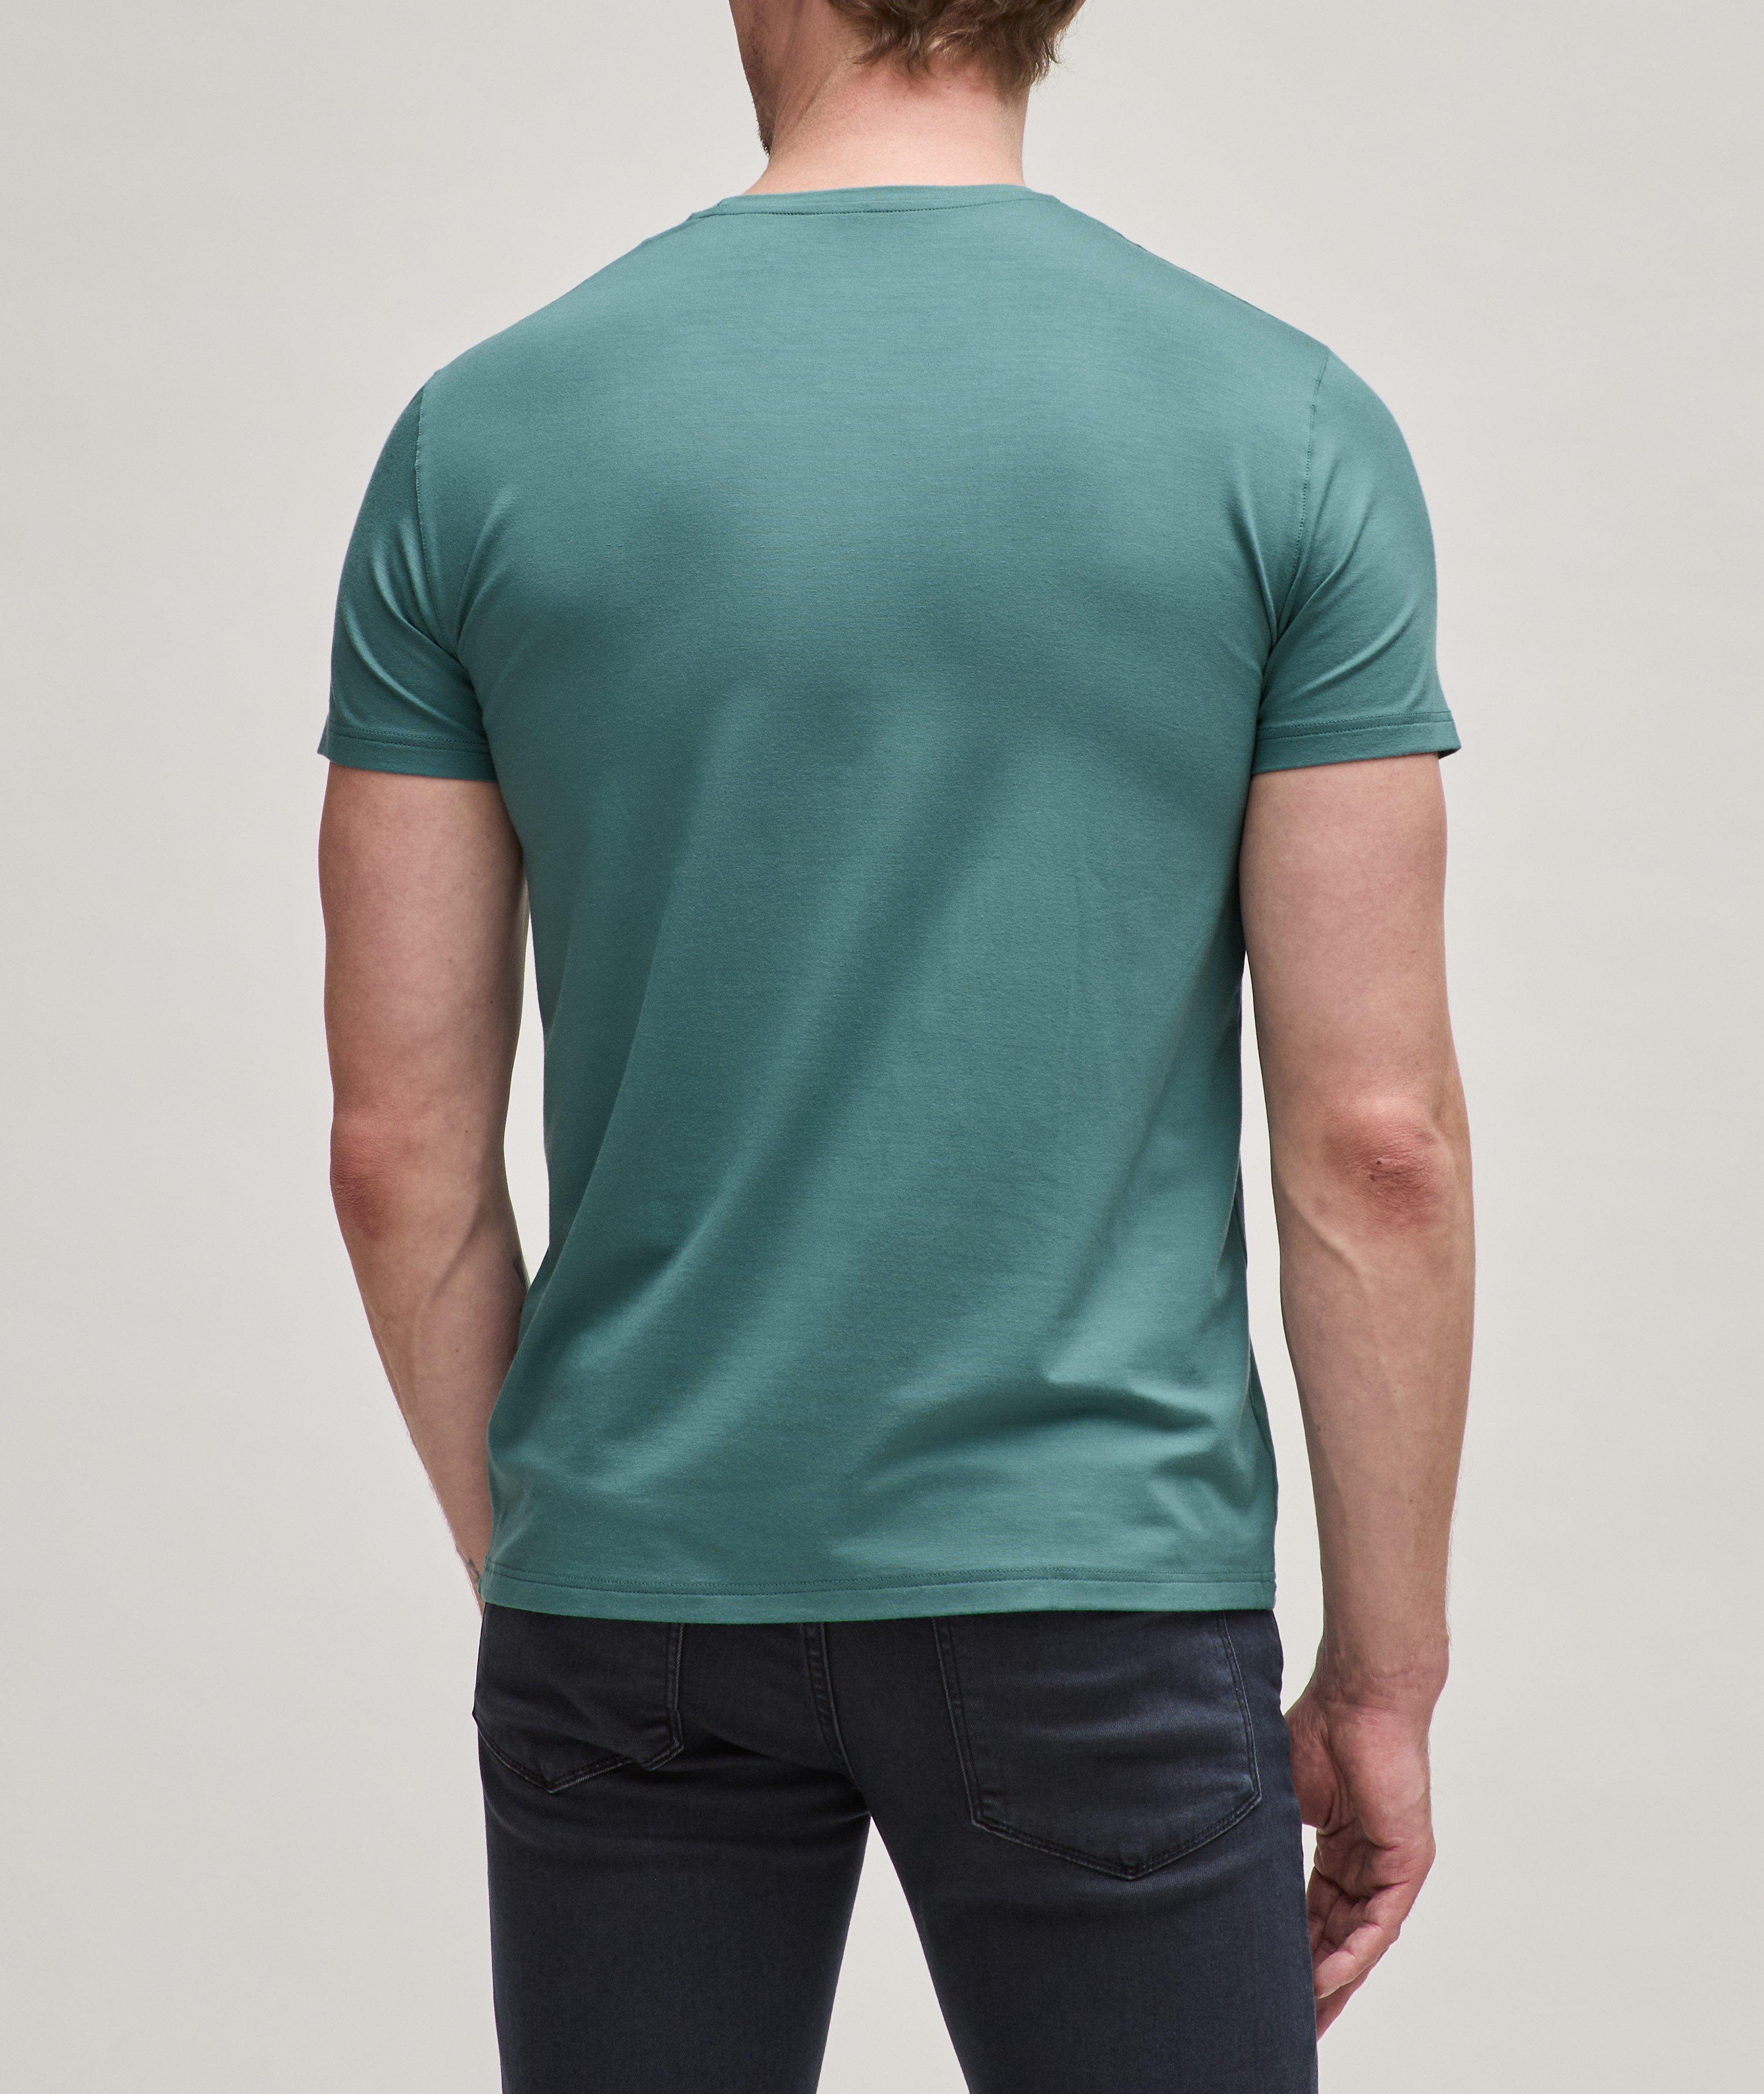 Basel Micro Modal T-Shirt image 2